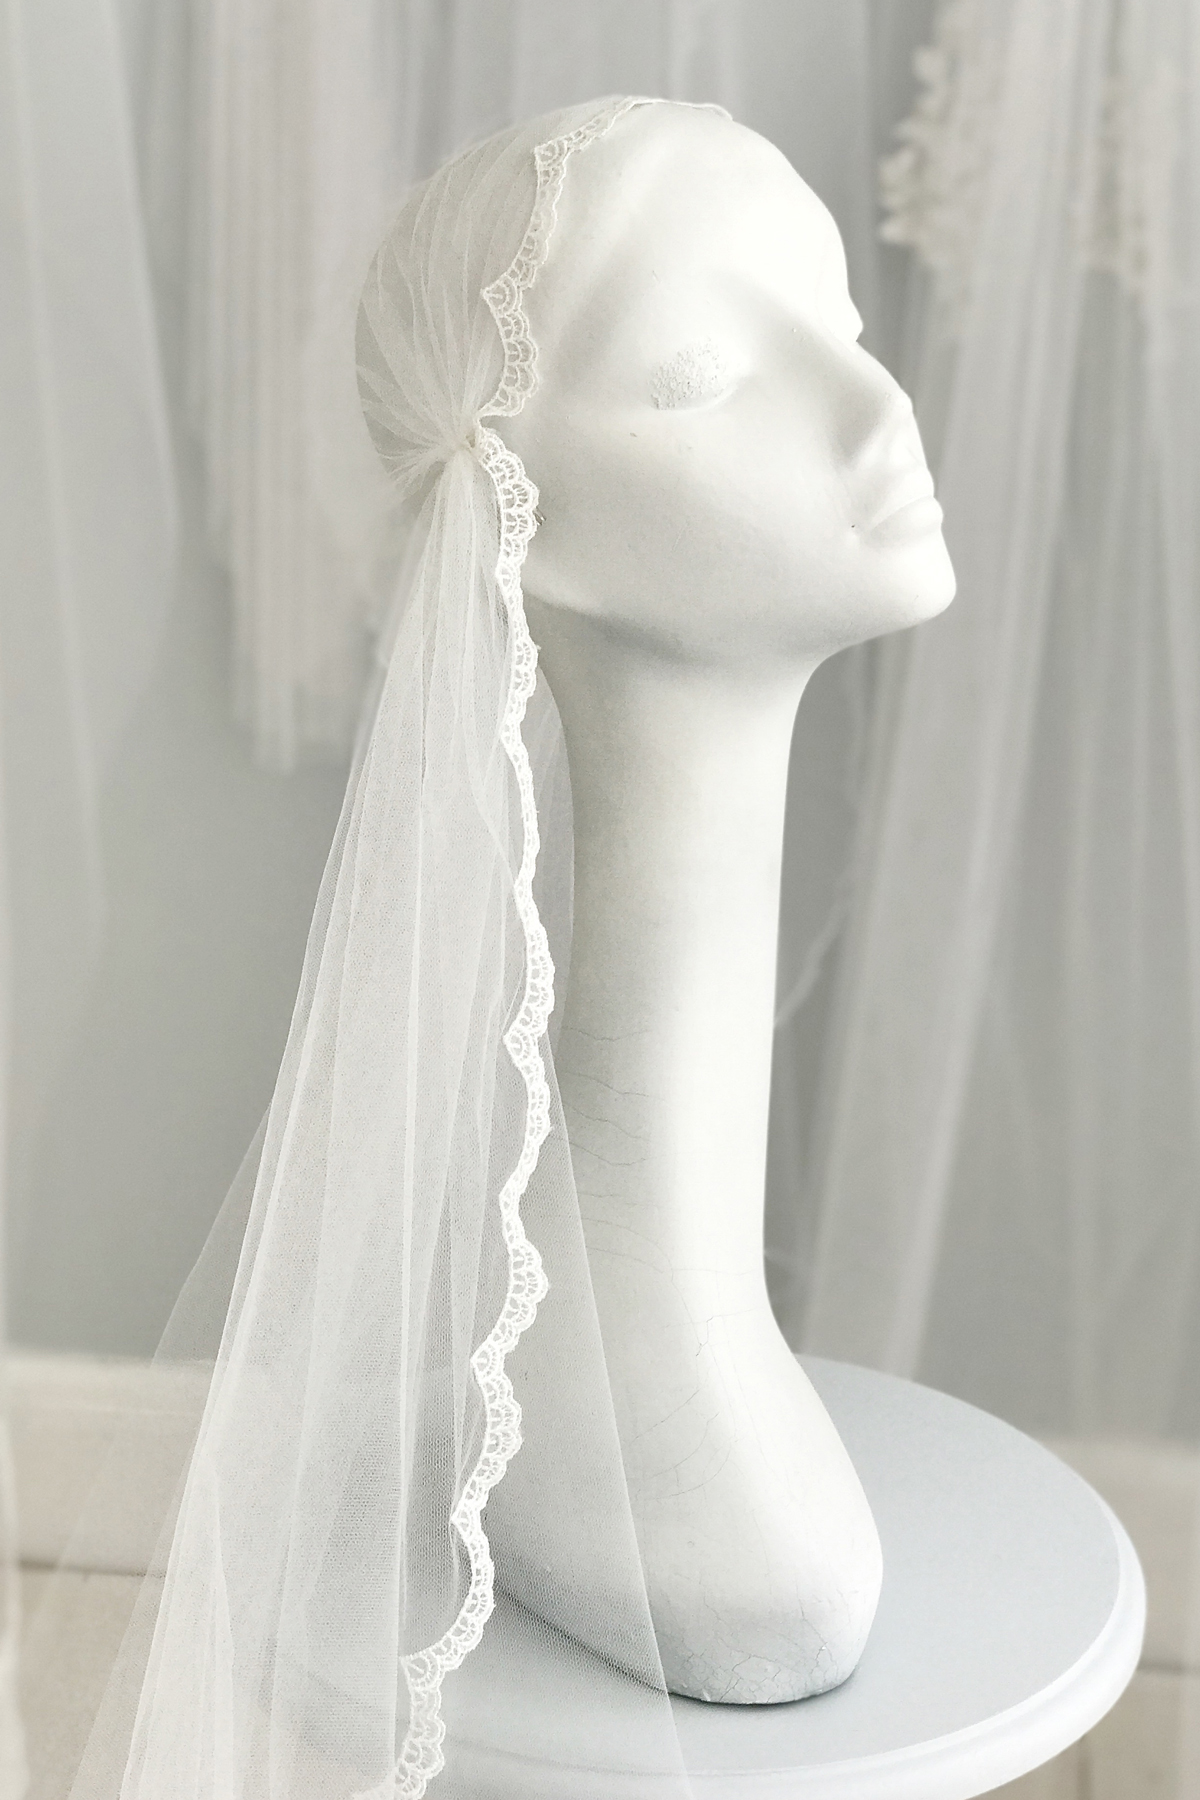 Juliet cap wedding veil with Ada lace 3